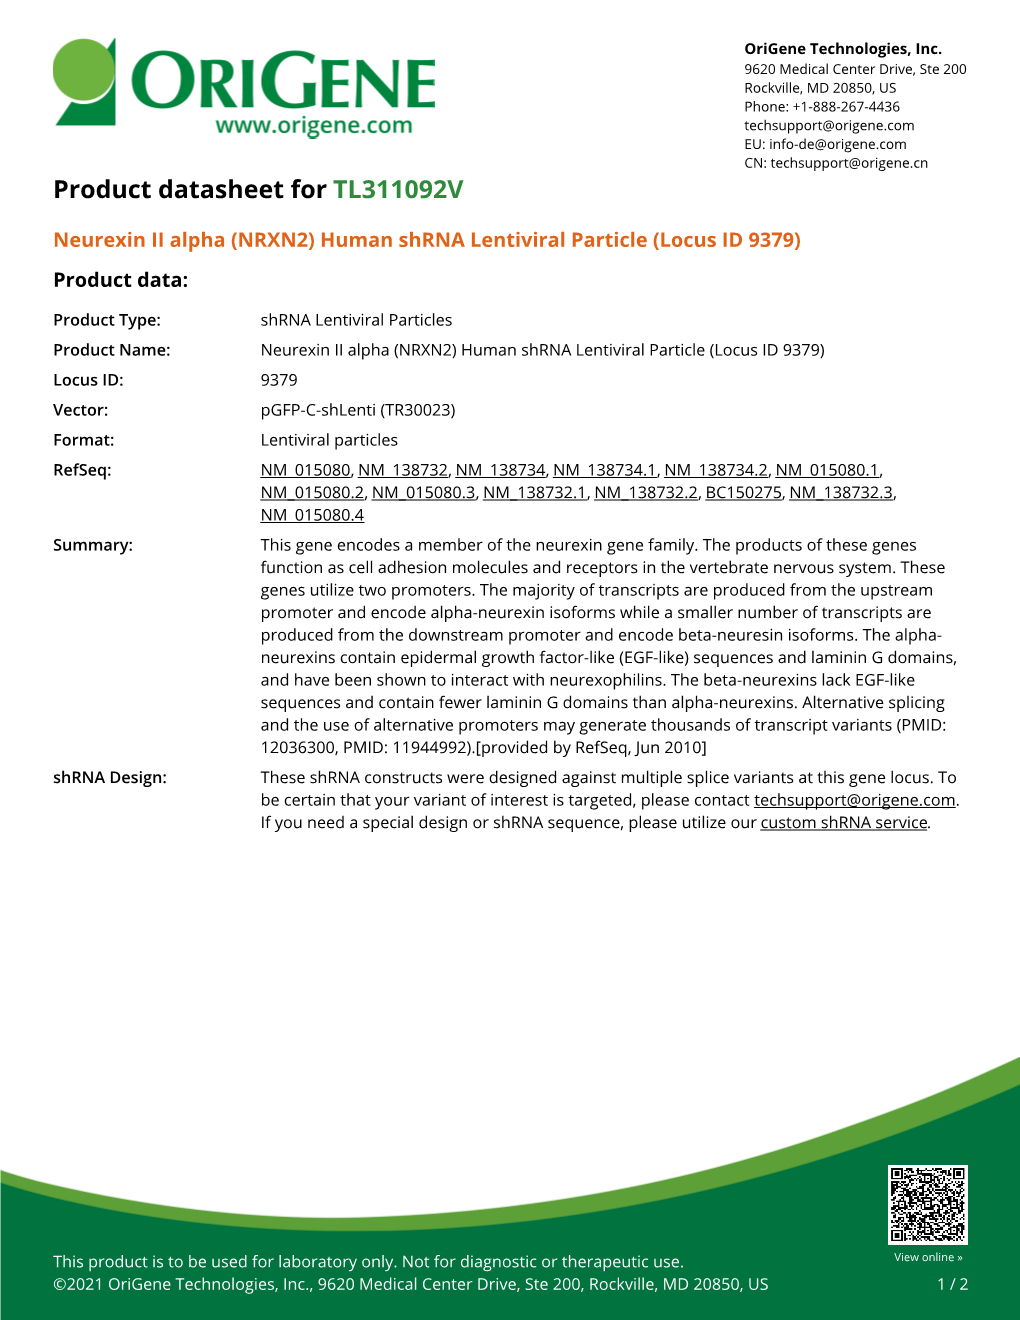 Neurexin II Alpha (NRXN2) Human Shrna Lentiviral Particle (Locus ID 9379) Product Data